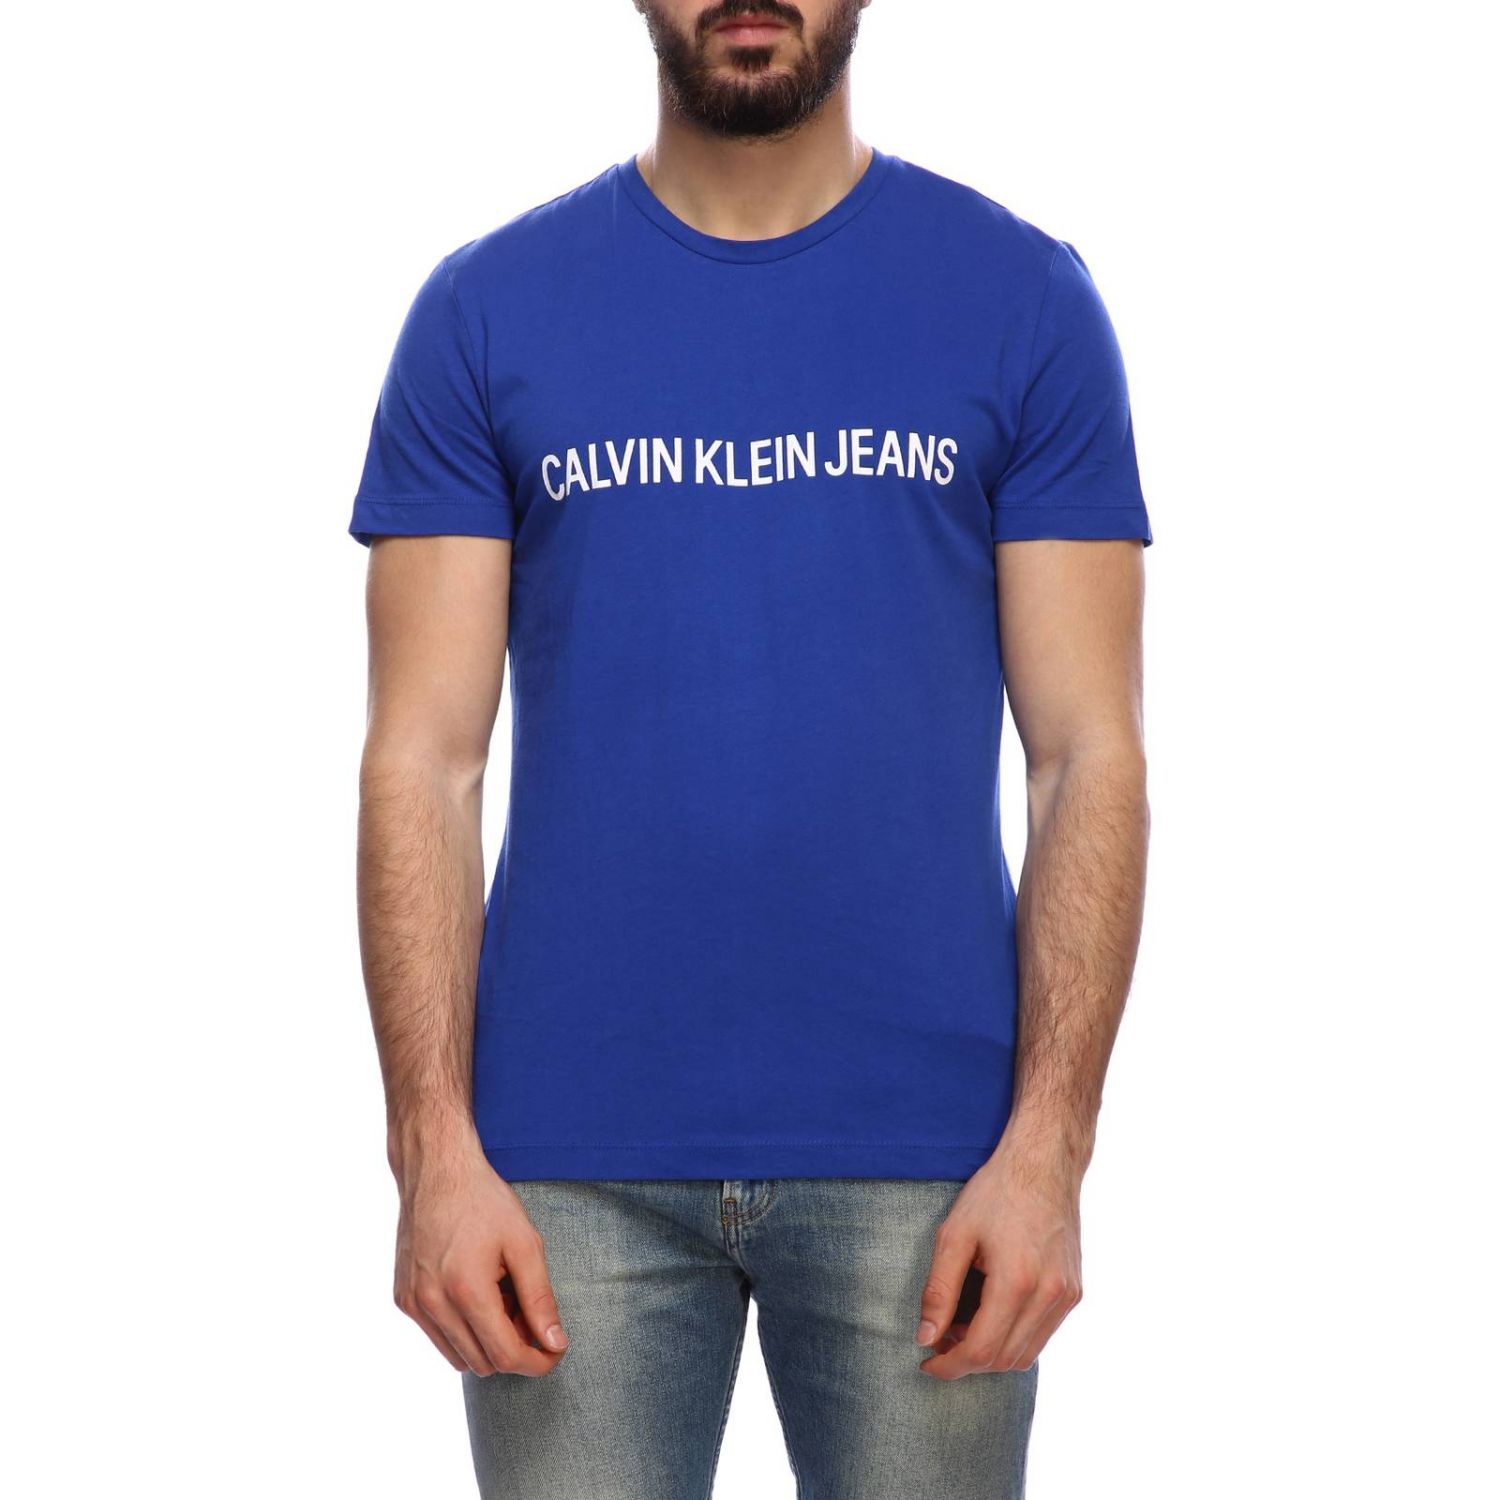 Calvin Klein Jeans Outlet: T-shirt men | T-Shirt Calvin Klein Jeans Men ...